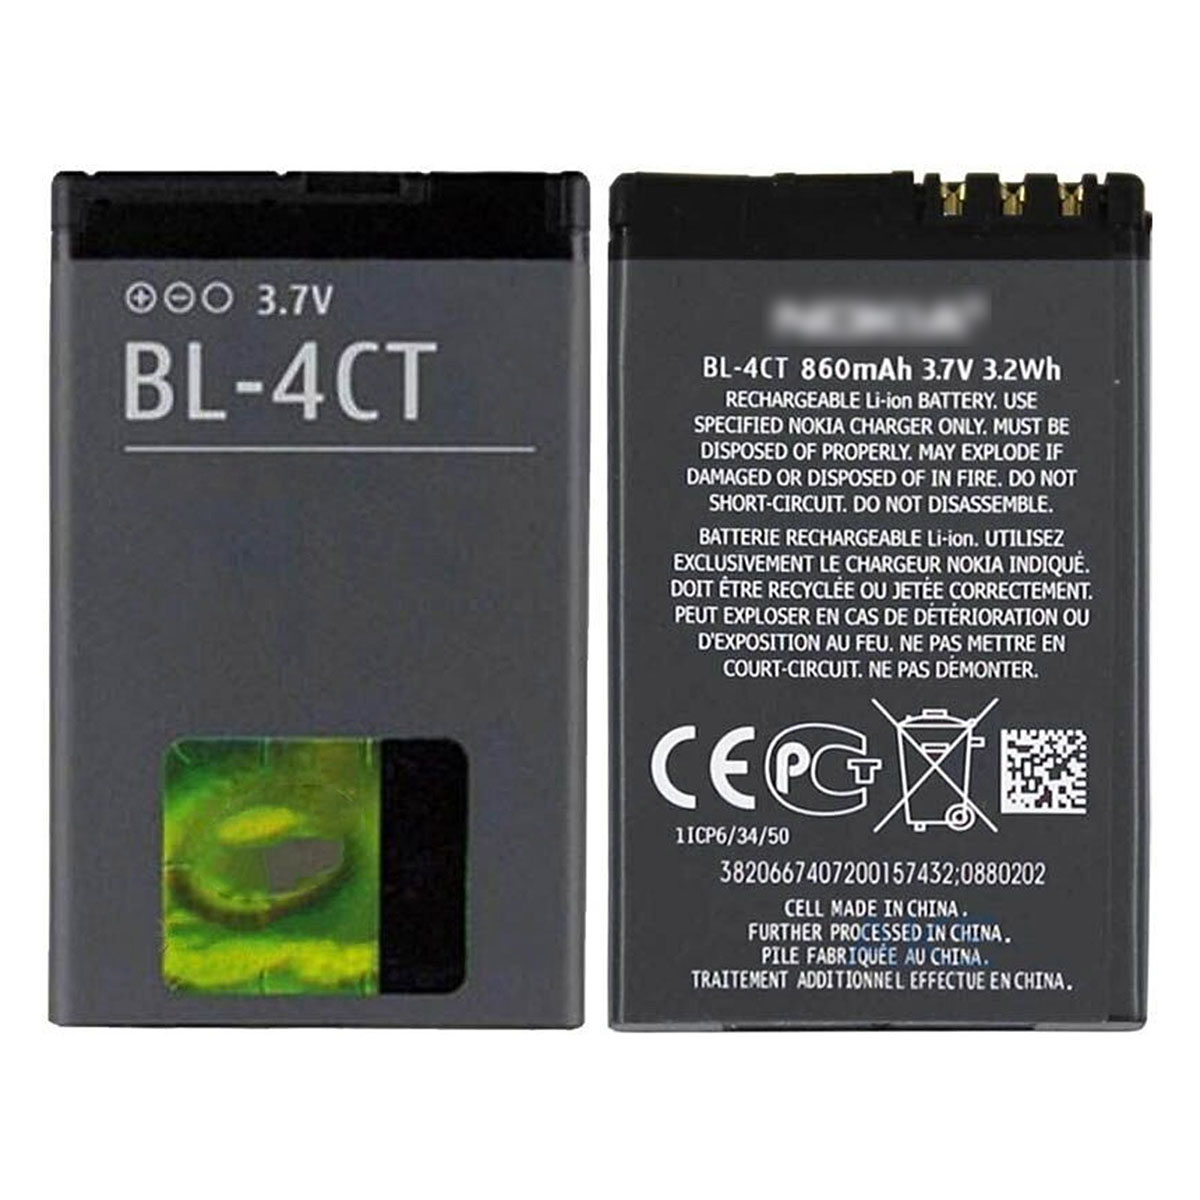 АКБ (Аккумулятор) BL-4CT для NOKIA 2720f, 3720, 5310XM, 5630XM, 6600f, 6700s, 6702s, 7205, 7210c, 7210s, 7230, 7212c, 7310c, X3, 3.2Wh, 3.7V, 860mAh